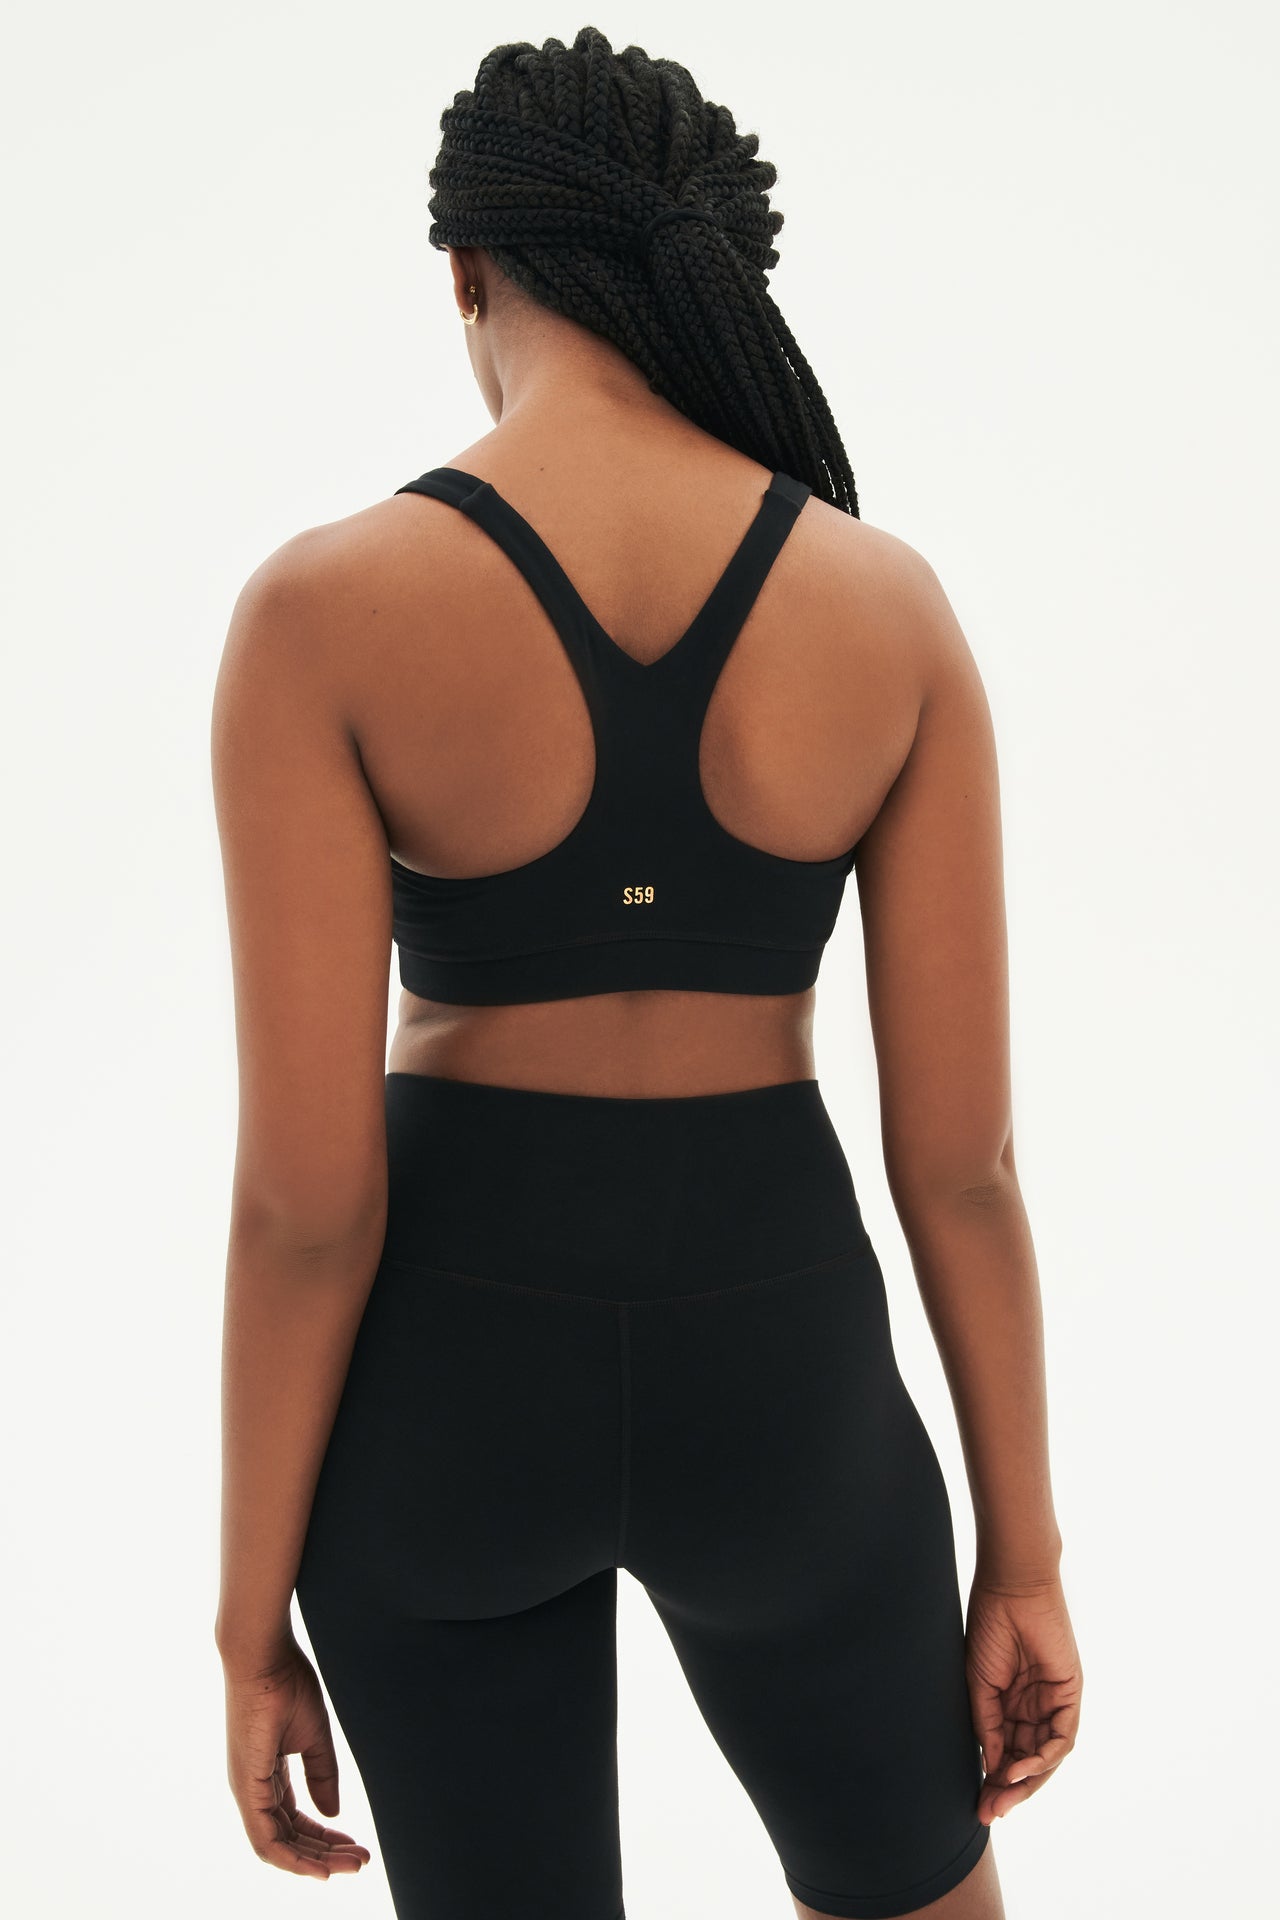 Back view of girl wearing black sports bra and black high waisted bike shorts